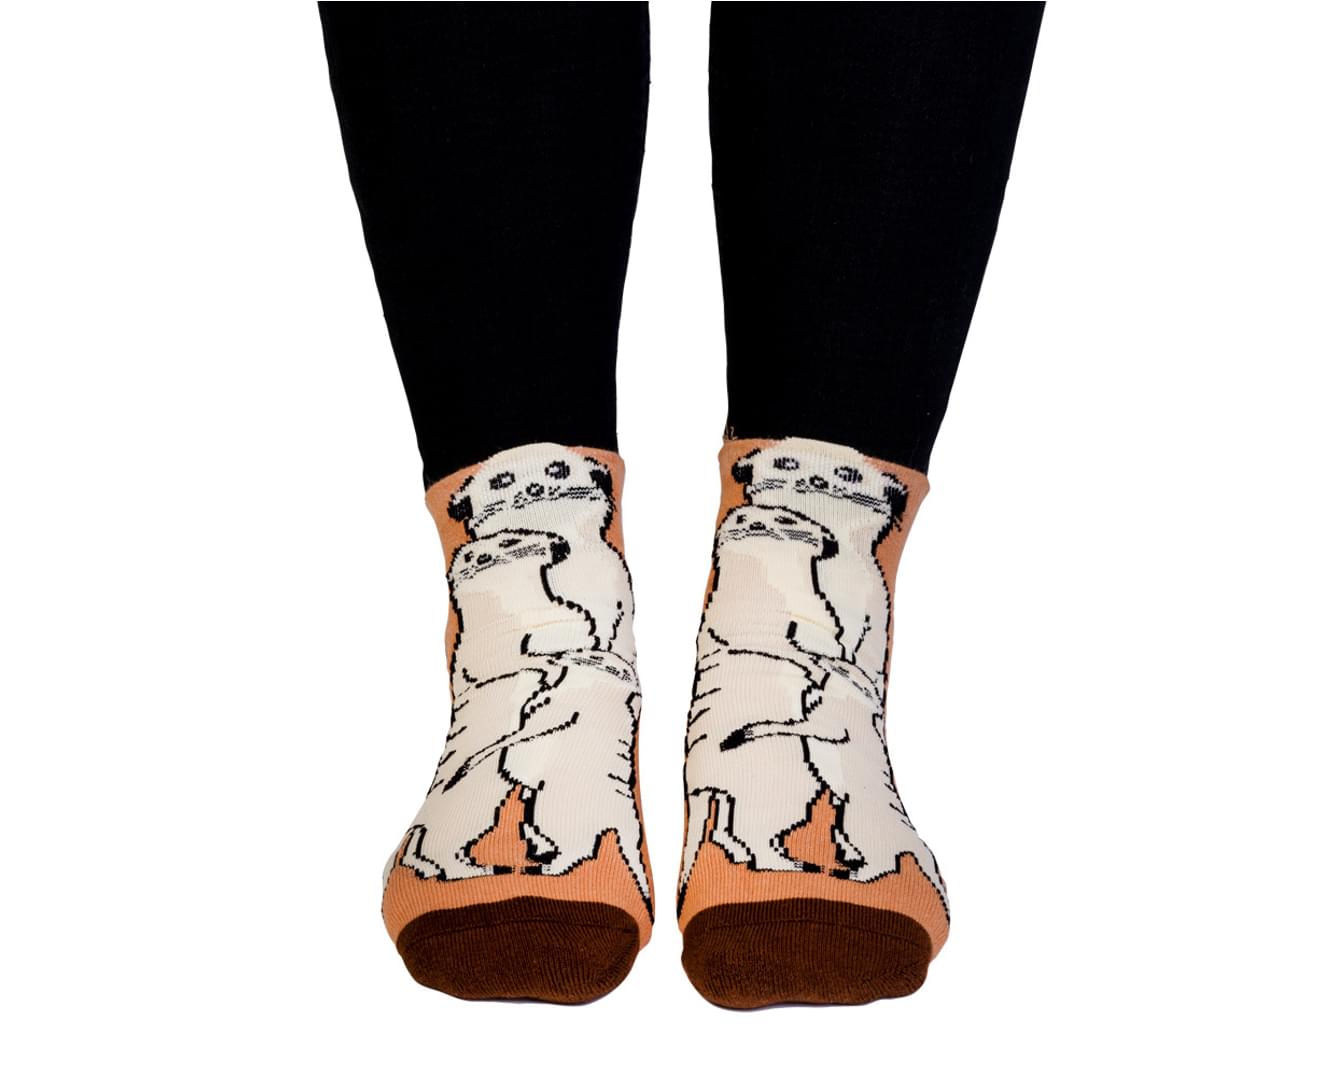 Feet speak socks Meerkat